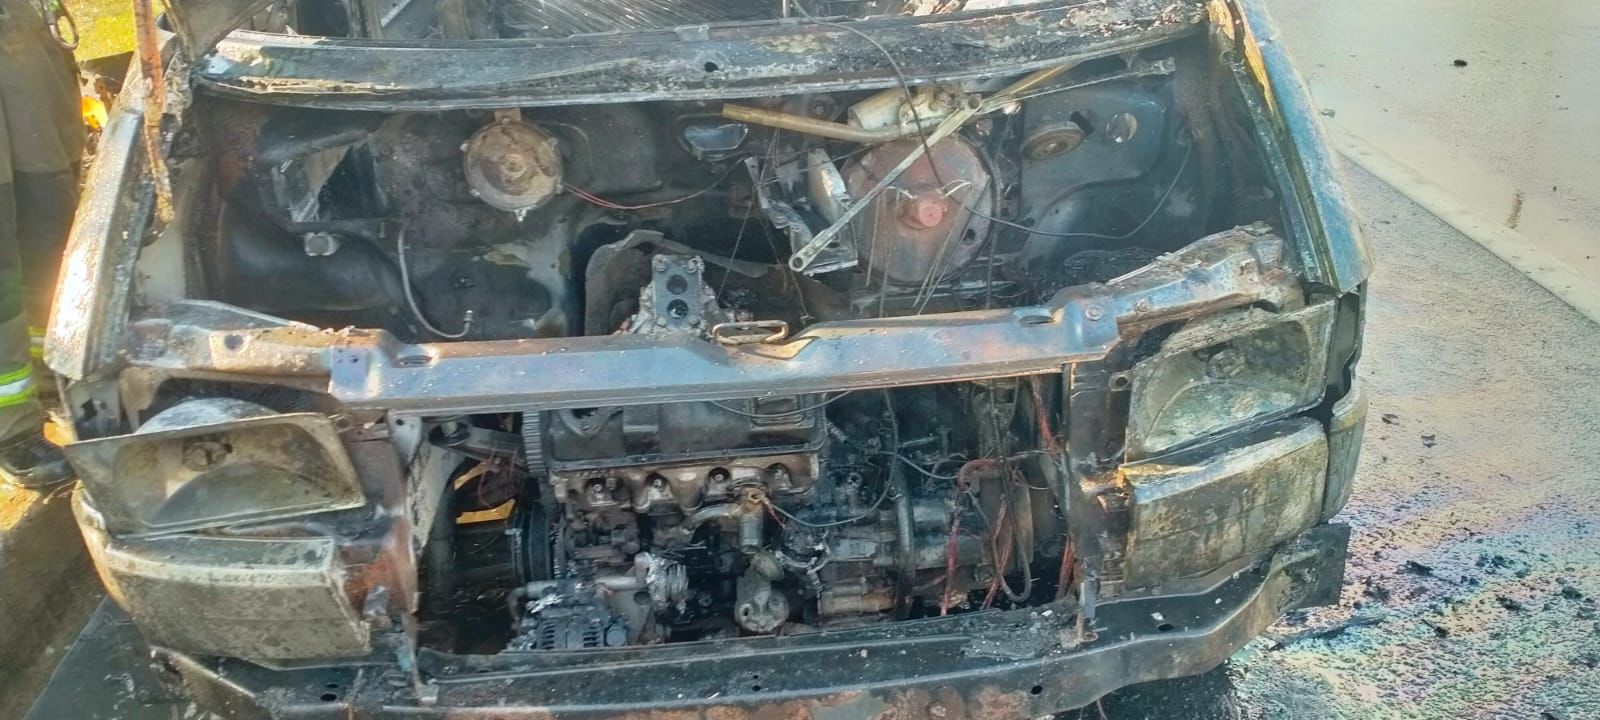 В Челнах на проспекте Хасана Туфана дотла сгорел микроавтобус. Видео